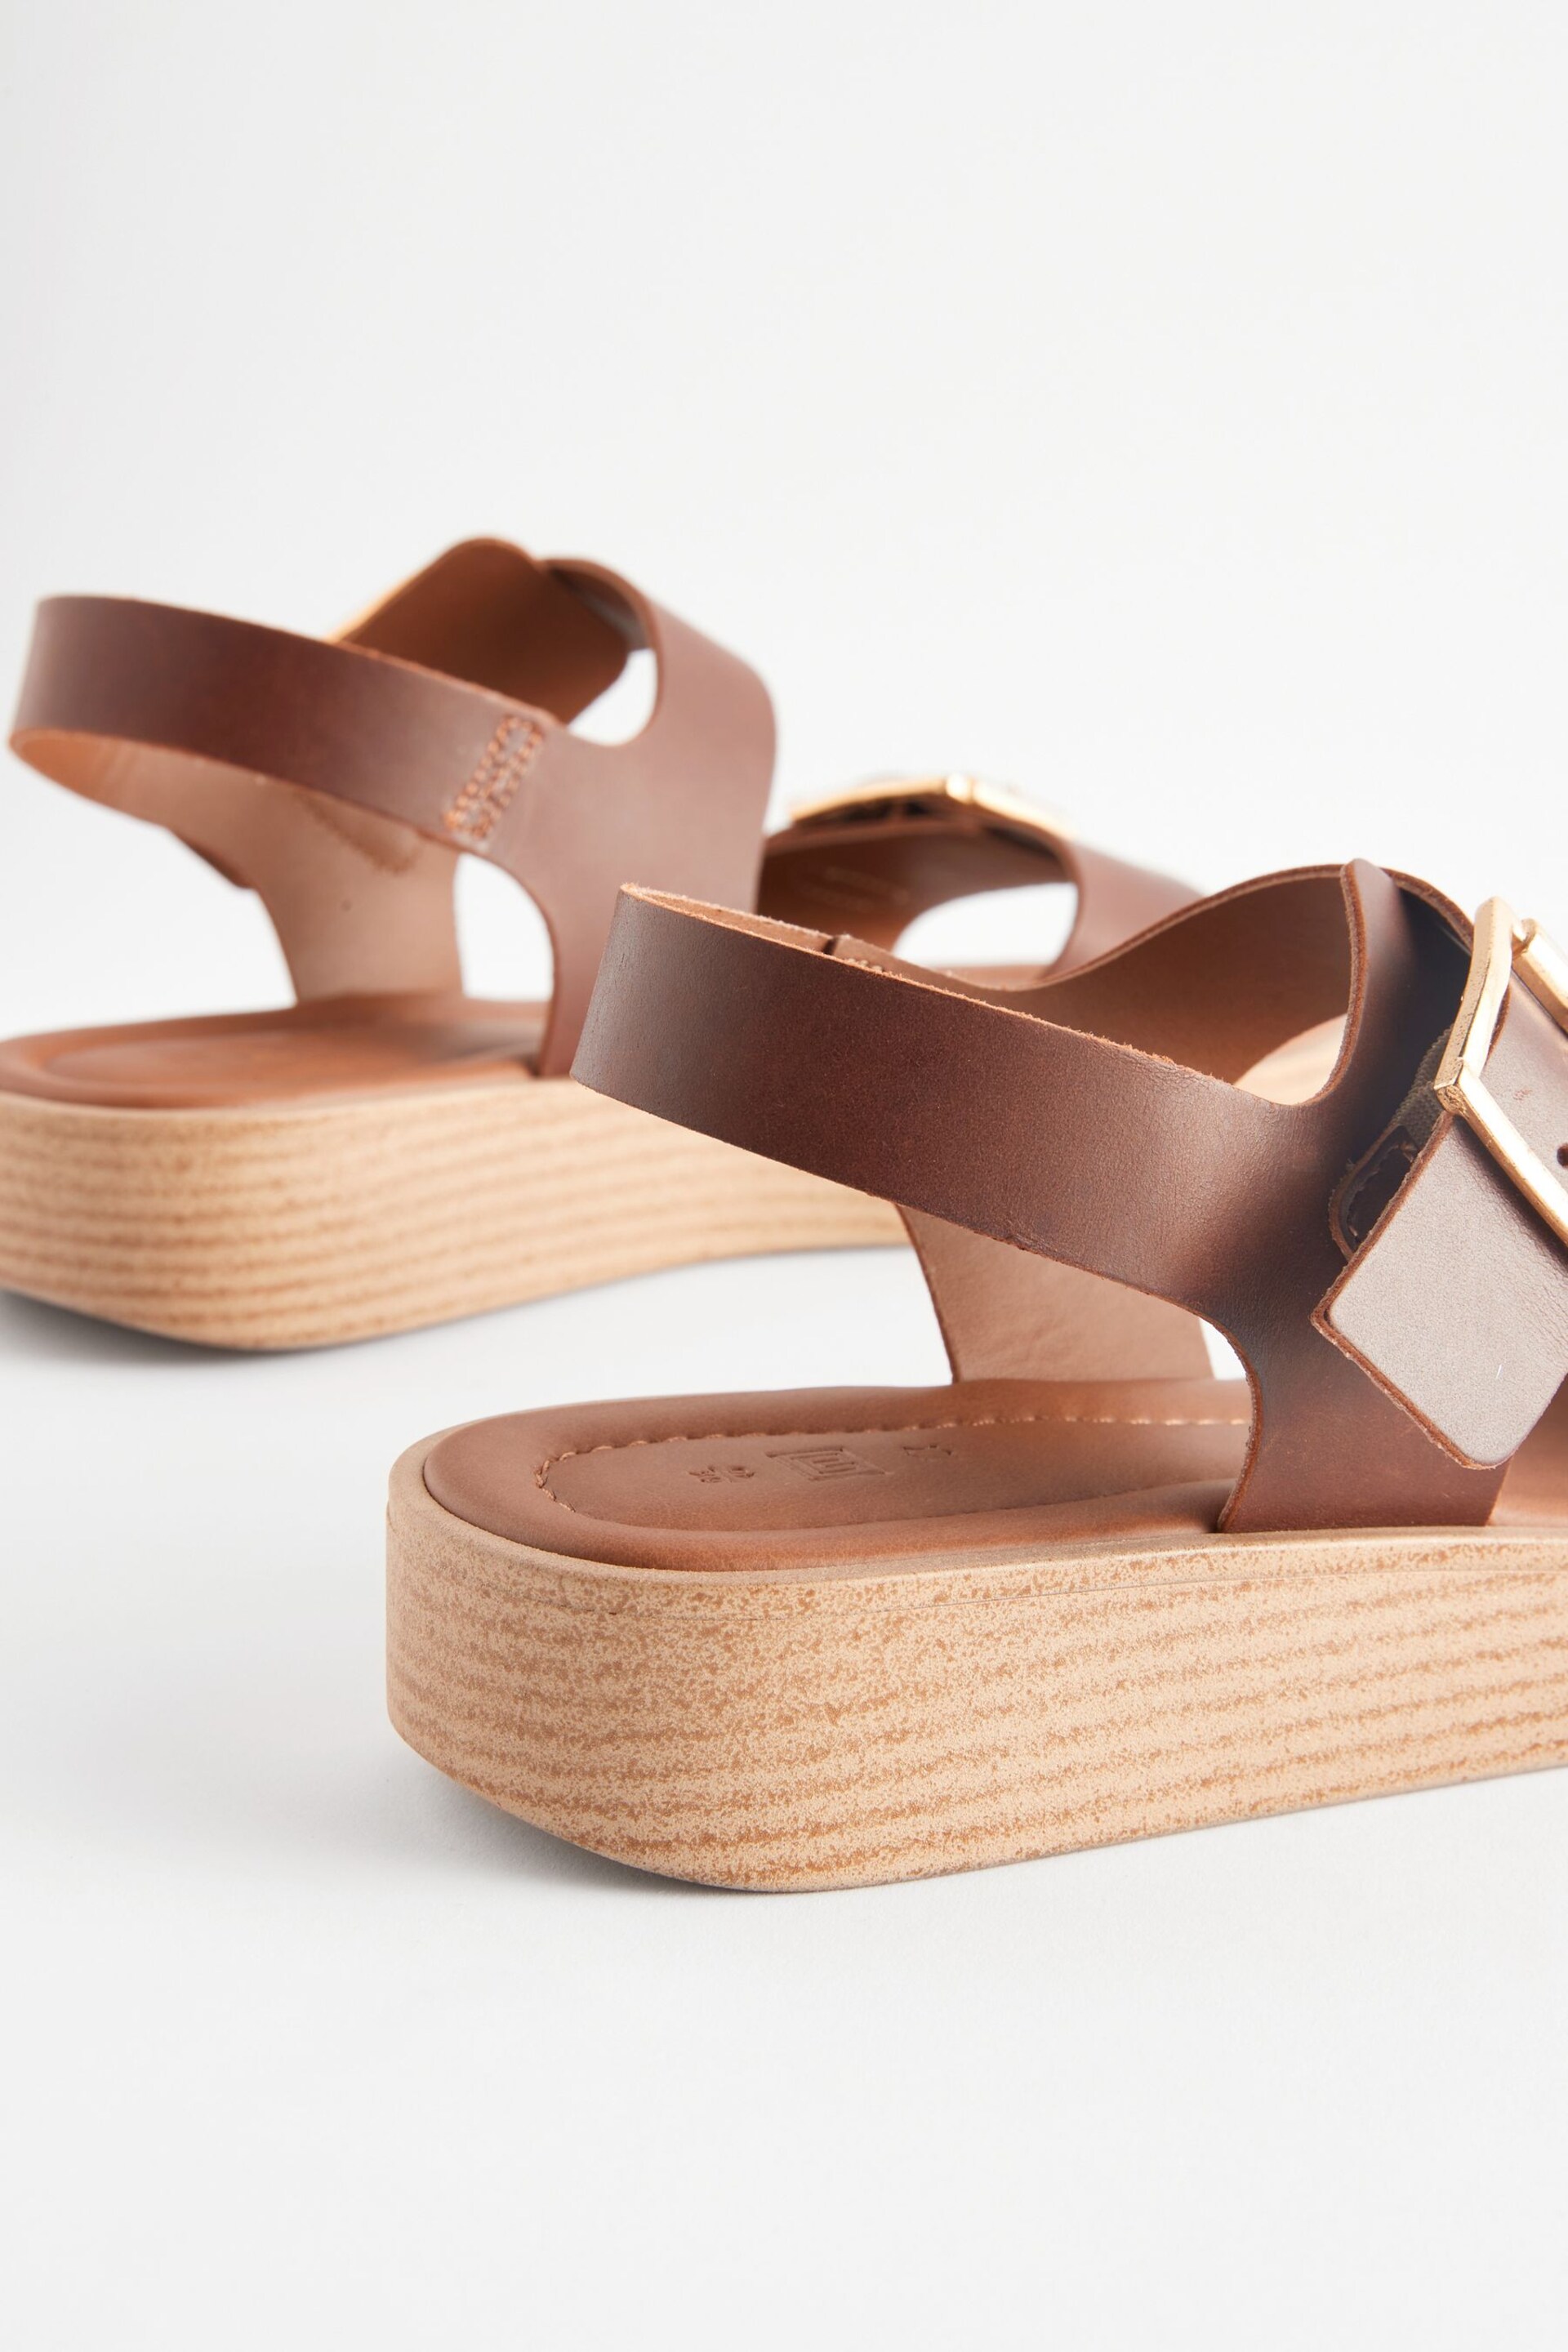 Tan Brown Regular/Wide Fit Buckle Flatform Sandals - Image 4 of 5